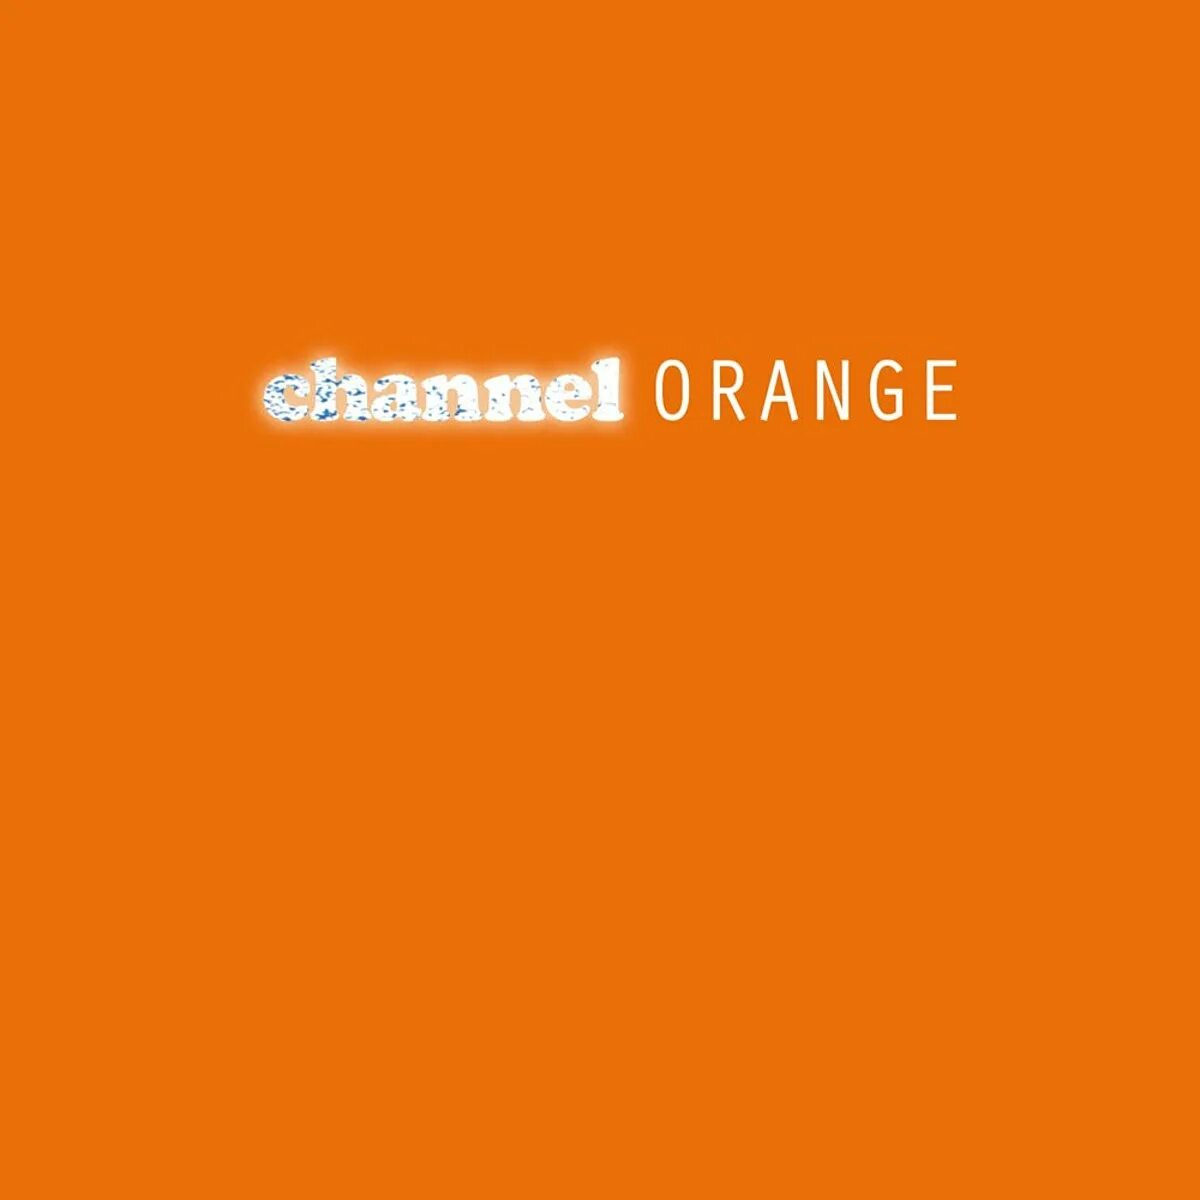 Channel текст. Frank Ocean - channel Orange (2012). Channel Orange Фрэнк оушен. Альбом Orange. Альбом channel Orange.